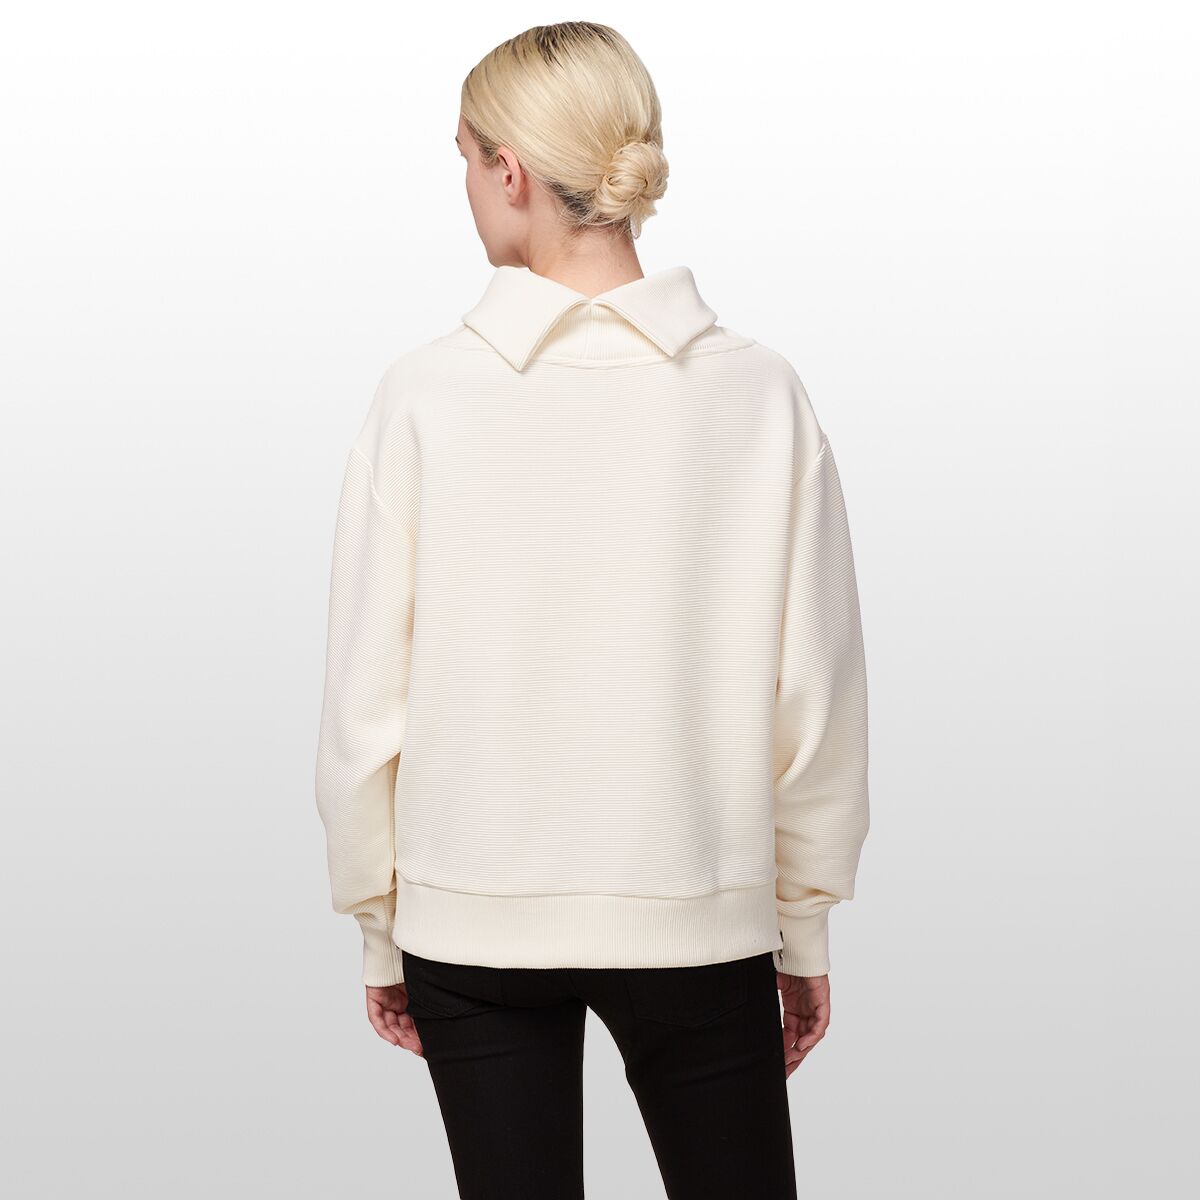 Varley Simon 2.0 Pullover Sweatshirt - Women's - Clothing